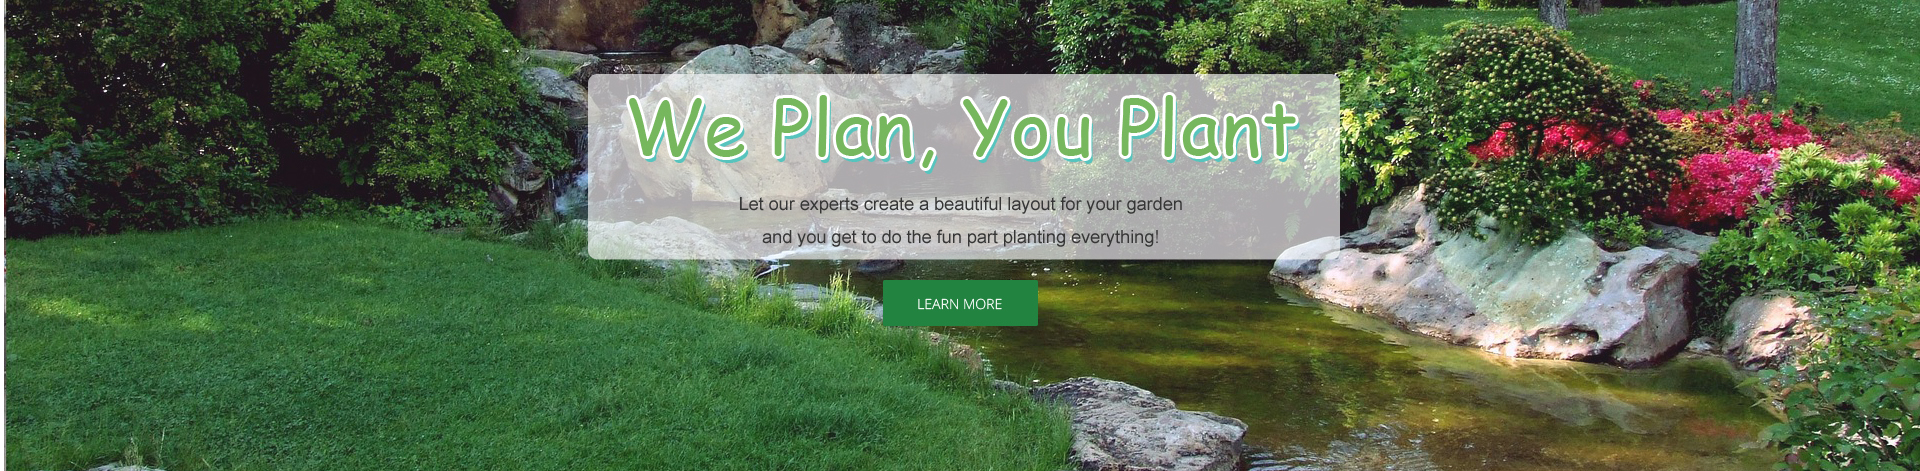 We Plan you Plant Service at Edward's Garden Center